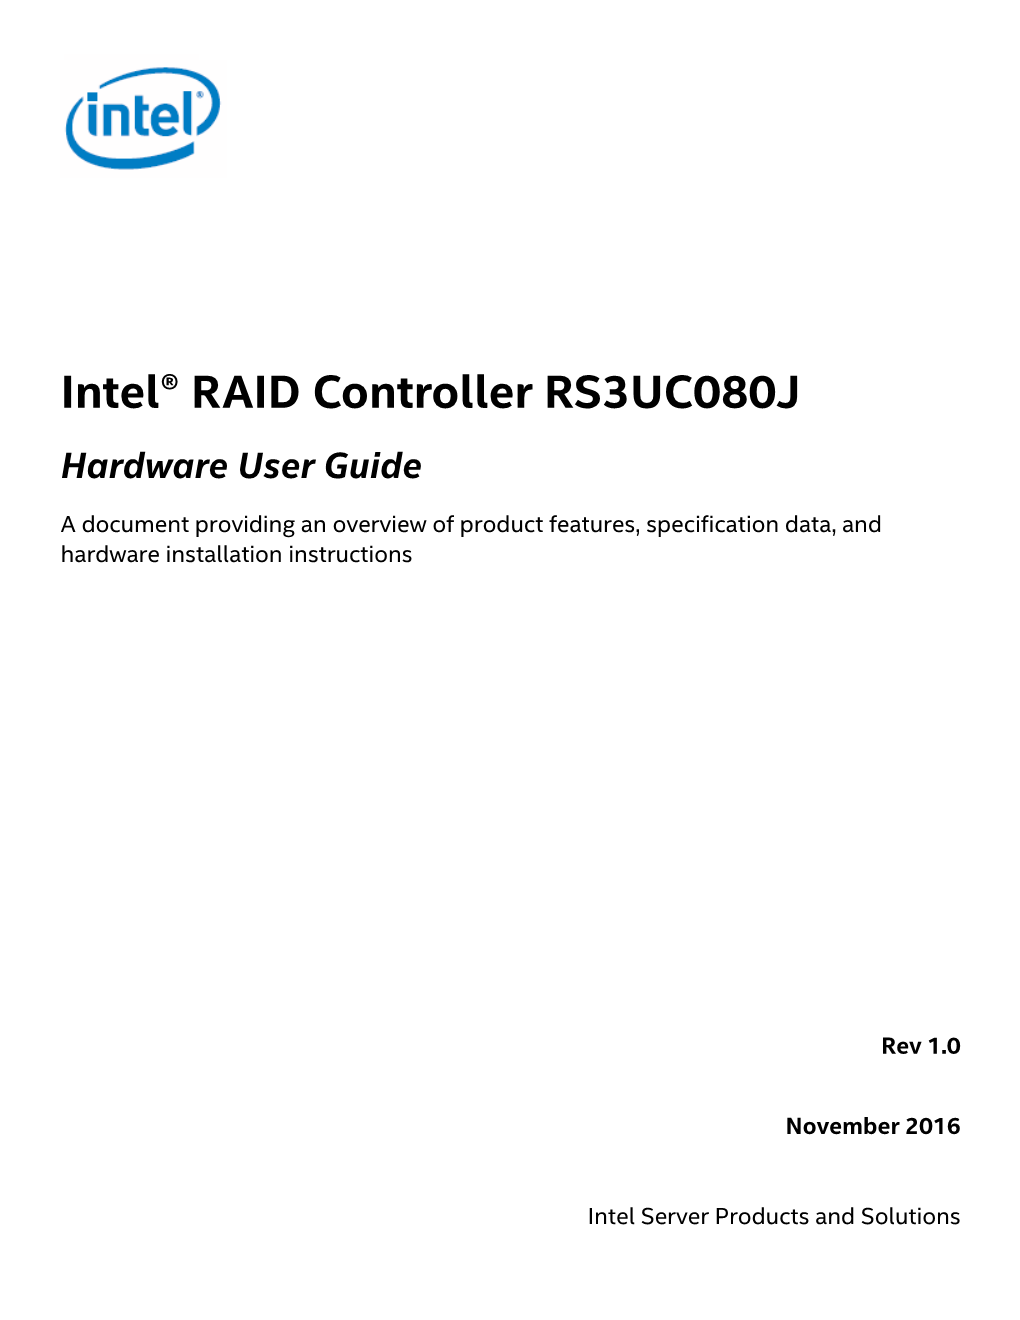 Intel® RAID Controller RS3UC080J Hardware User Guide